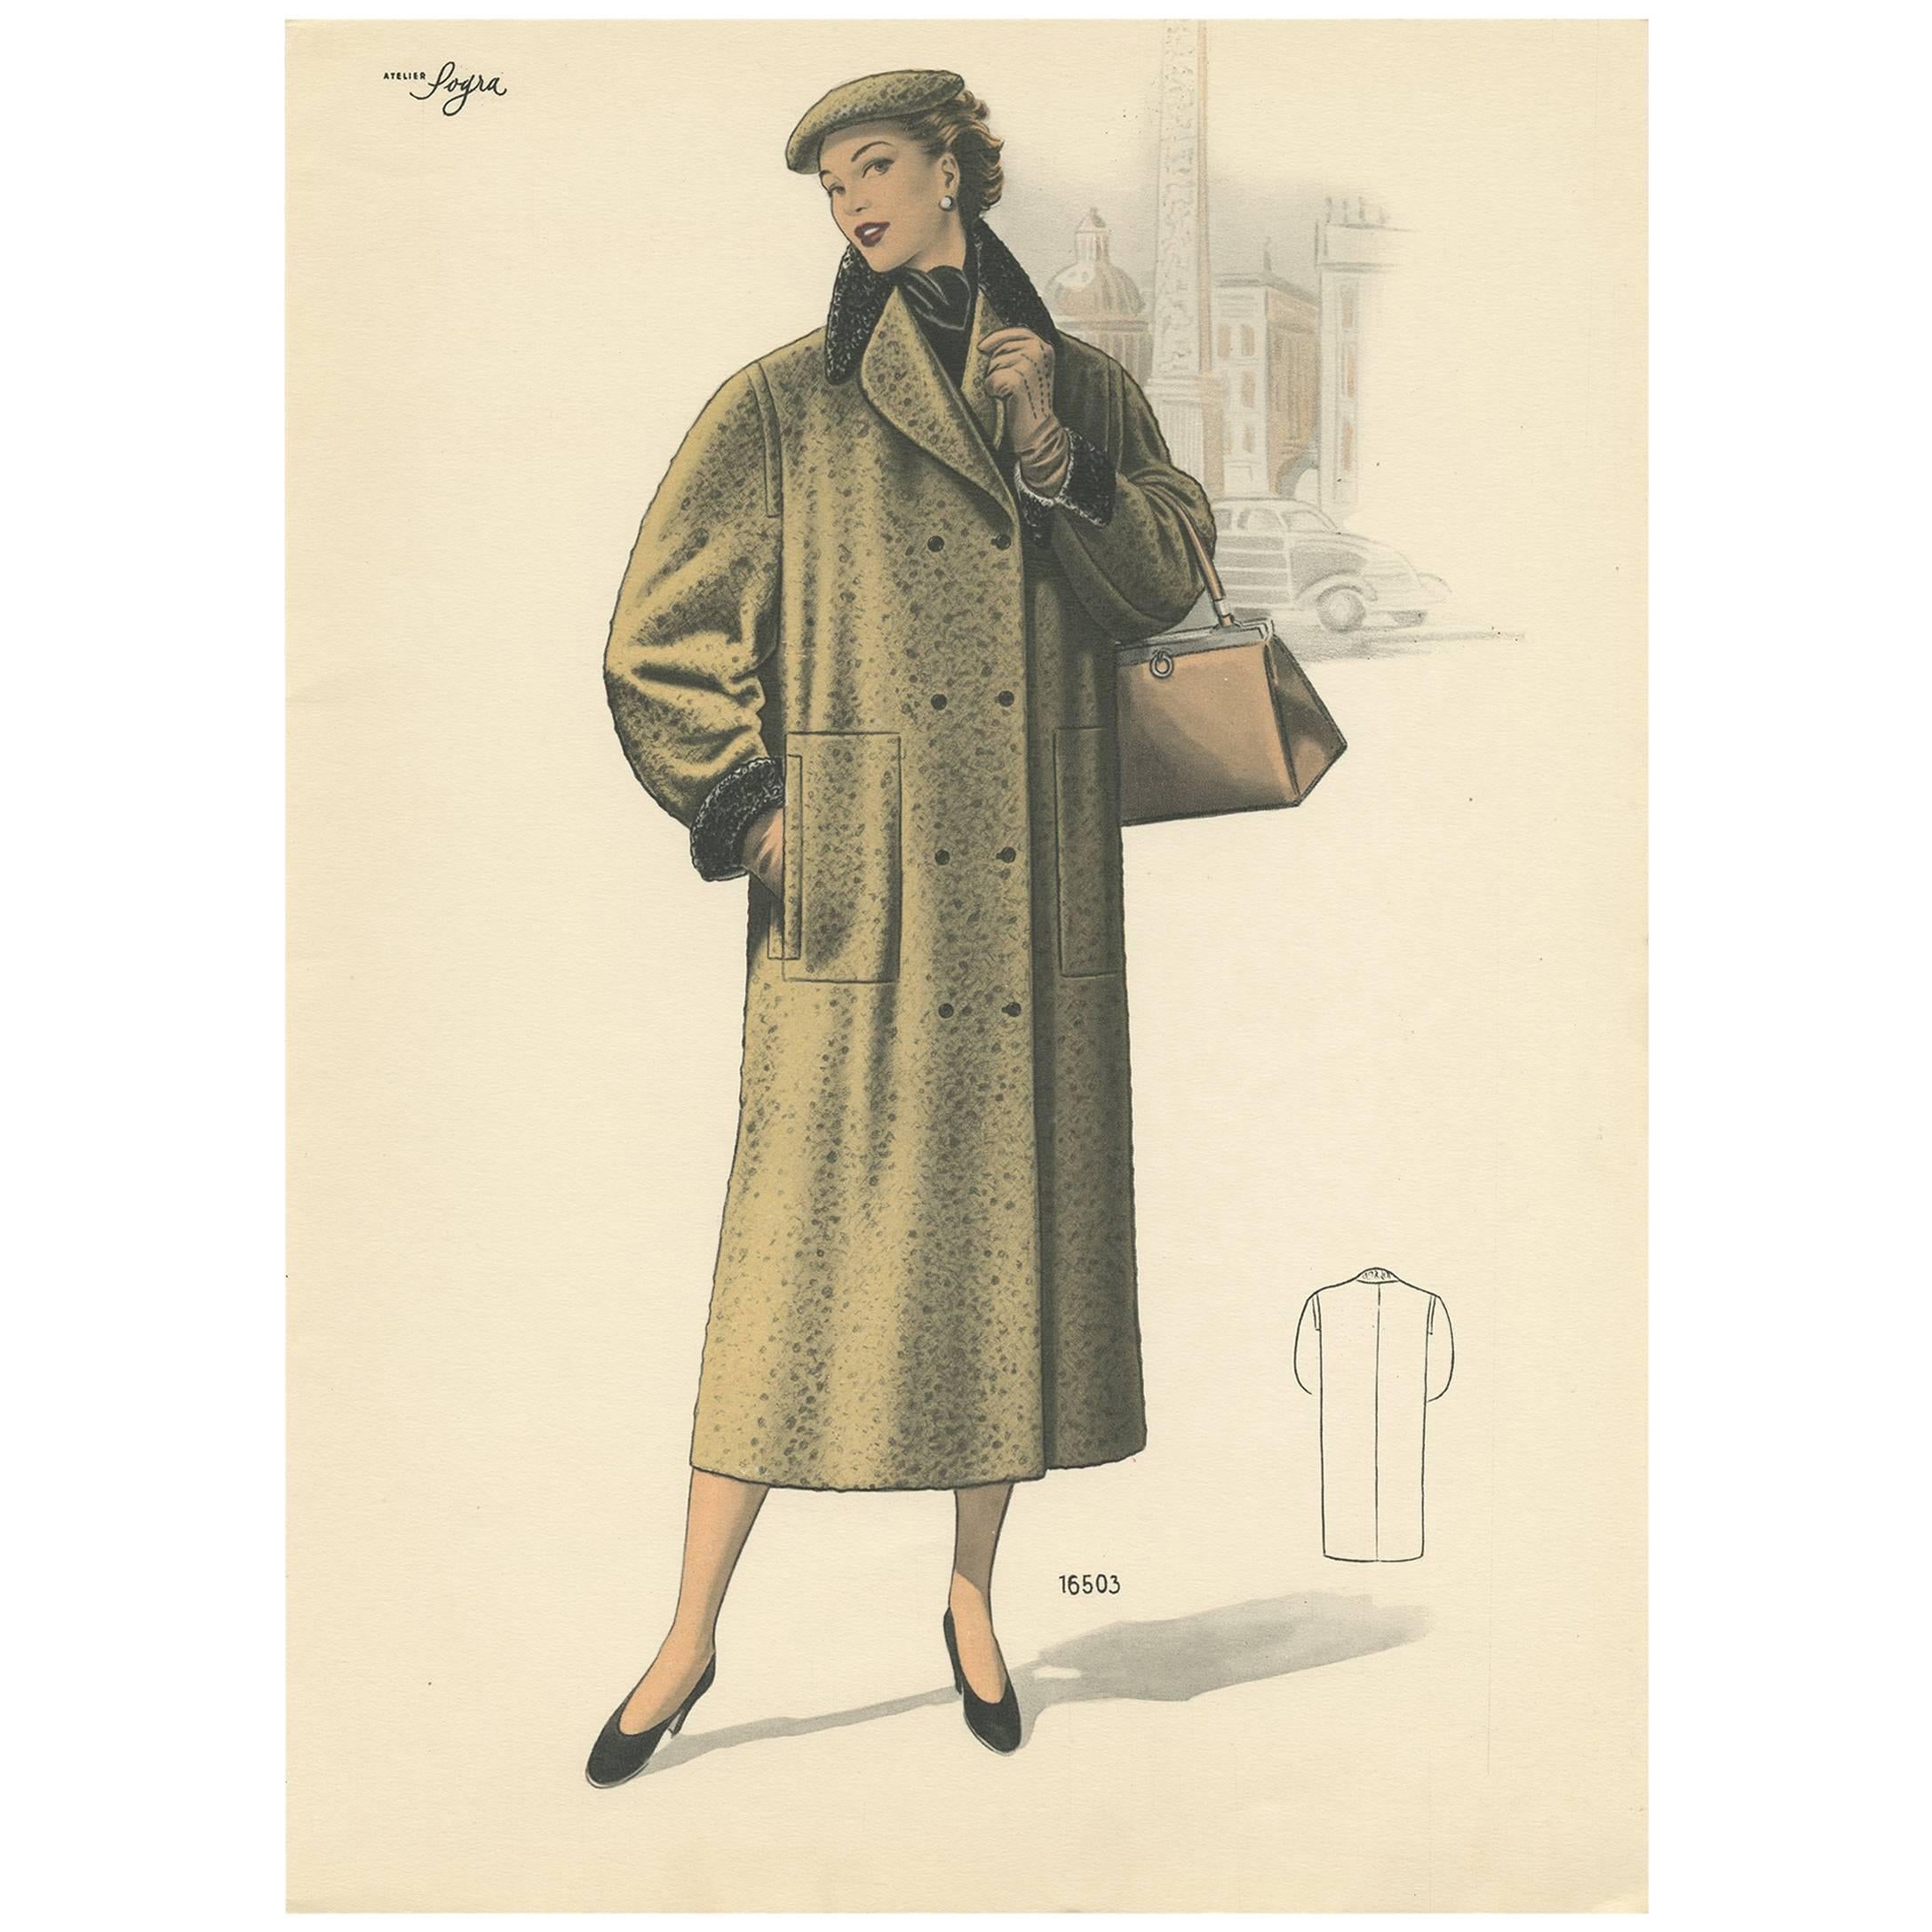 Vintage Fashion Print ‘Pl. 16503’ published in Le Tailleur Moderne, 1954